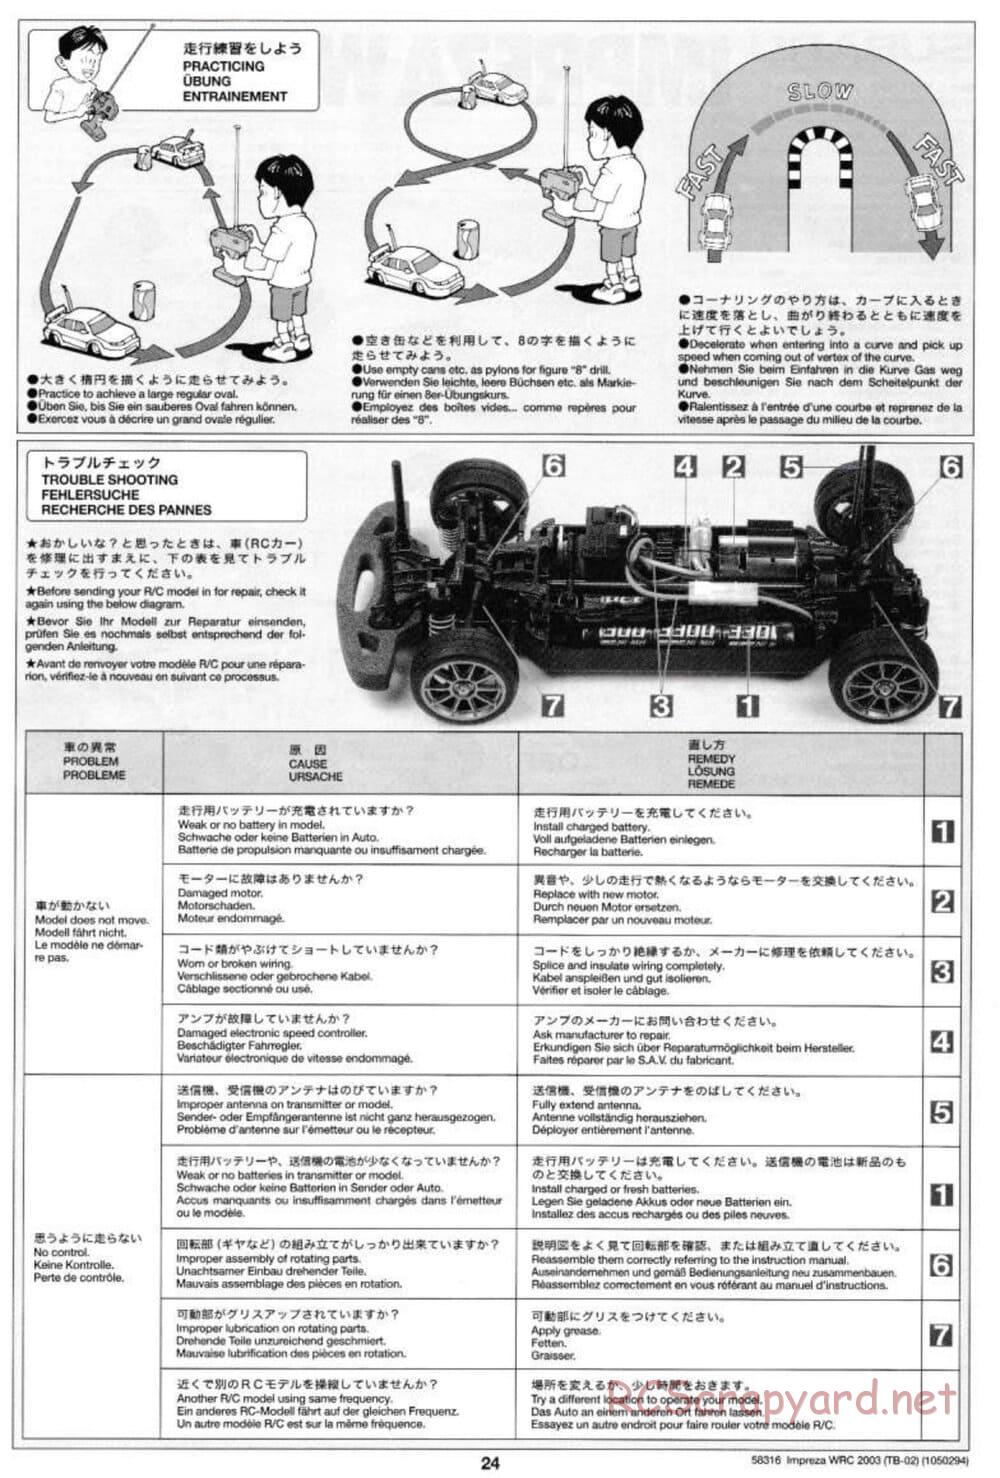 Tamiya - Subaru Impreza WRC 2003 - TB-02 Chassis - Manual - Page 24